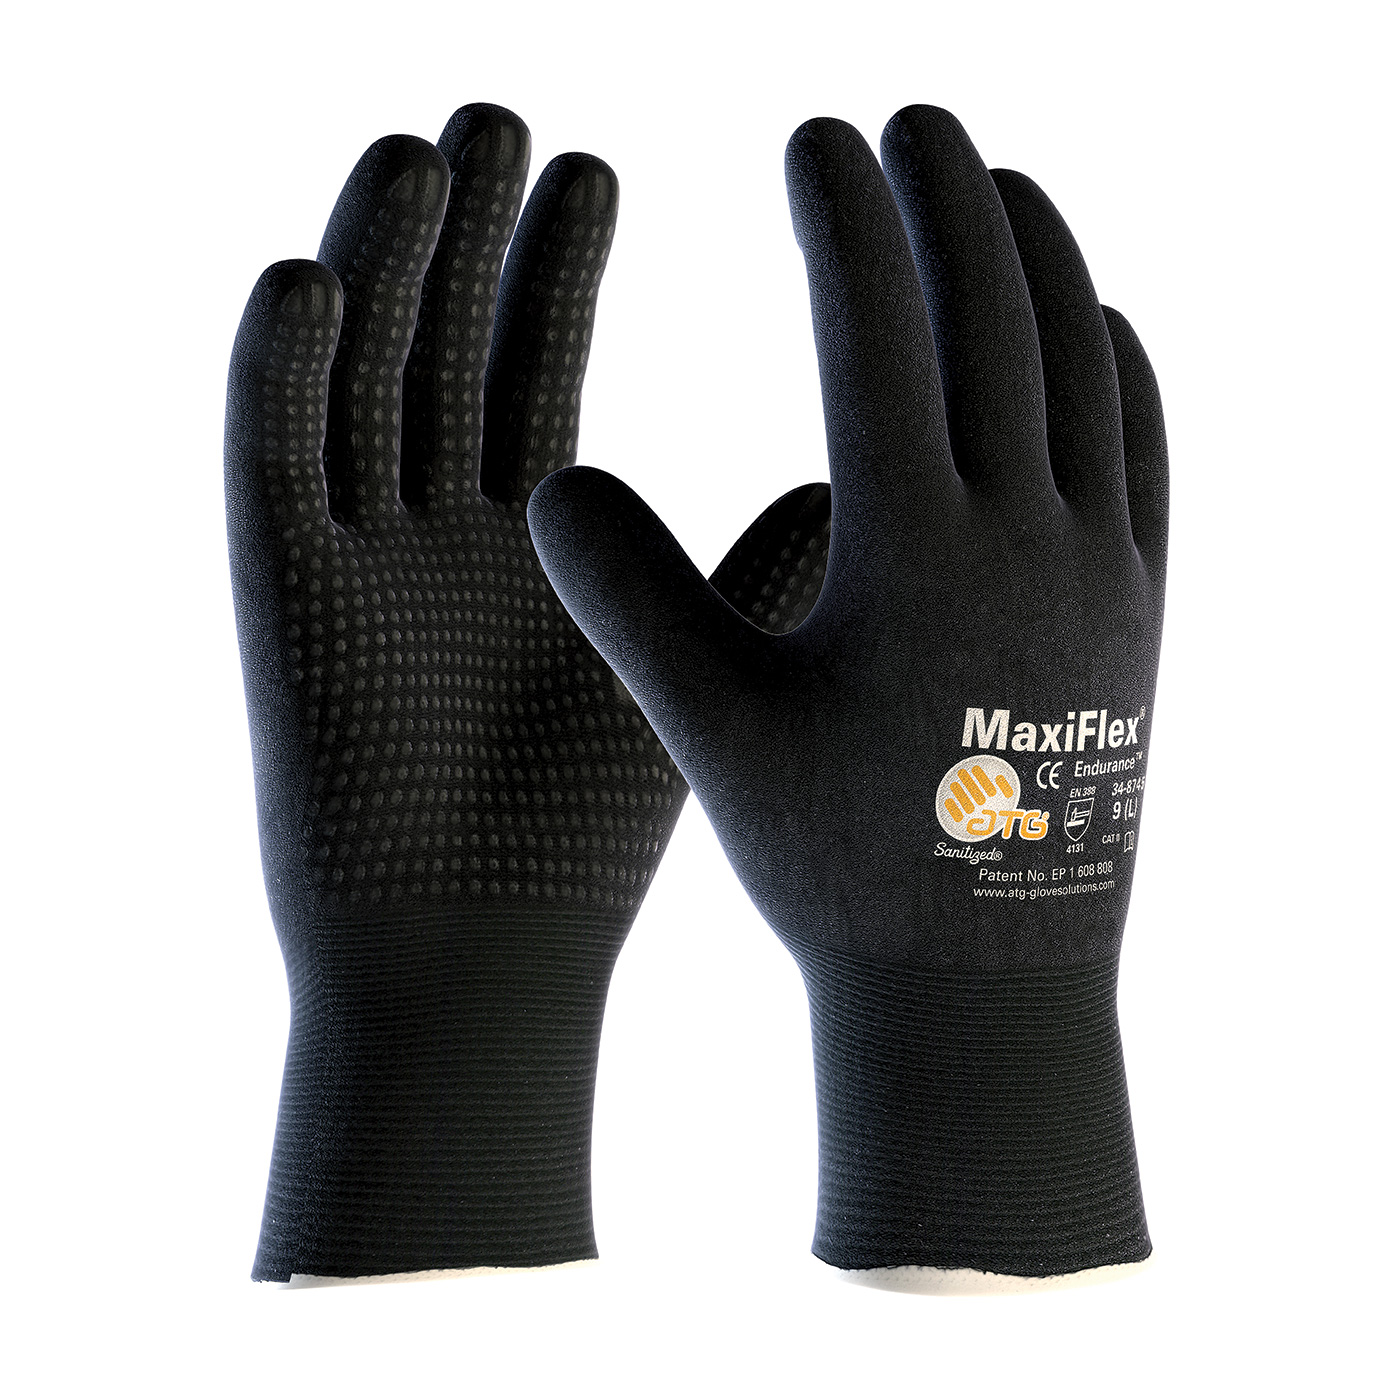 PIP 34-8745/XL MaxiFlex Endurance Seamless Knit Nylon/Lycra Glove with Nitrile Coated MicroFoam Grip on Full Hand - Micro Dot Palm - X-Large PID-34 8745 XL